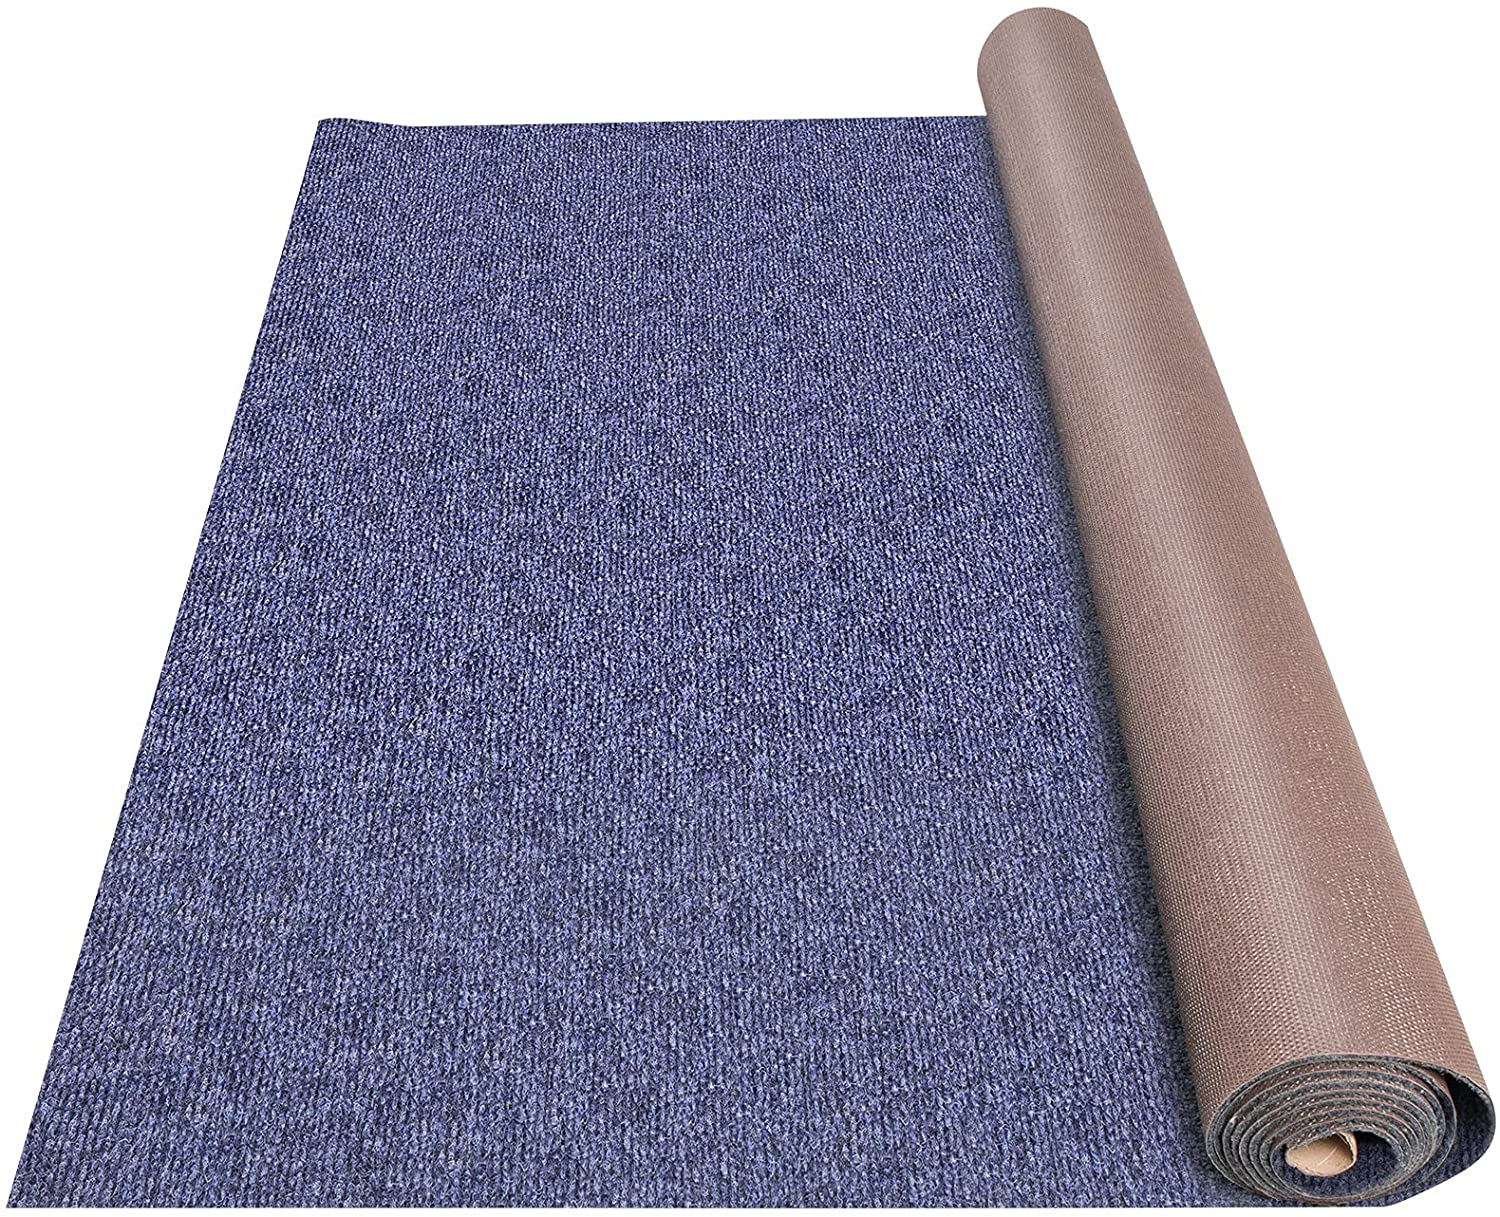 Blue garage carpet roll